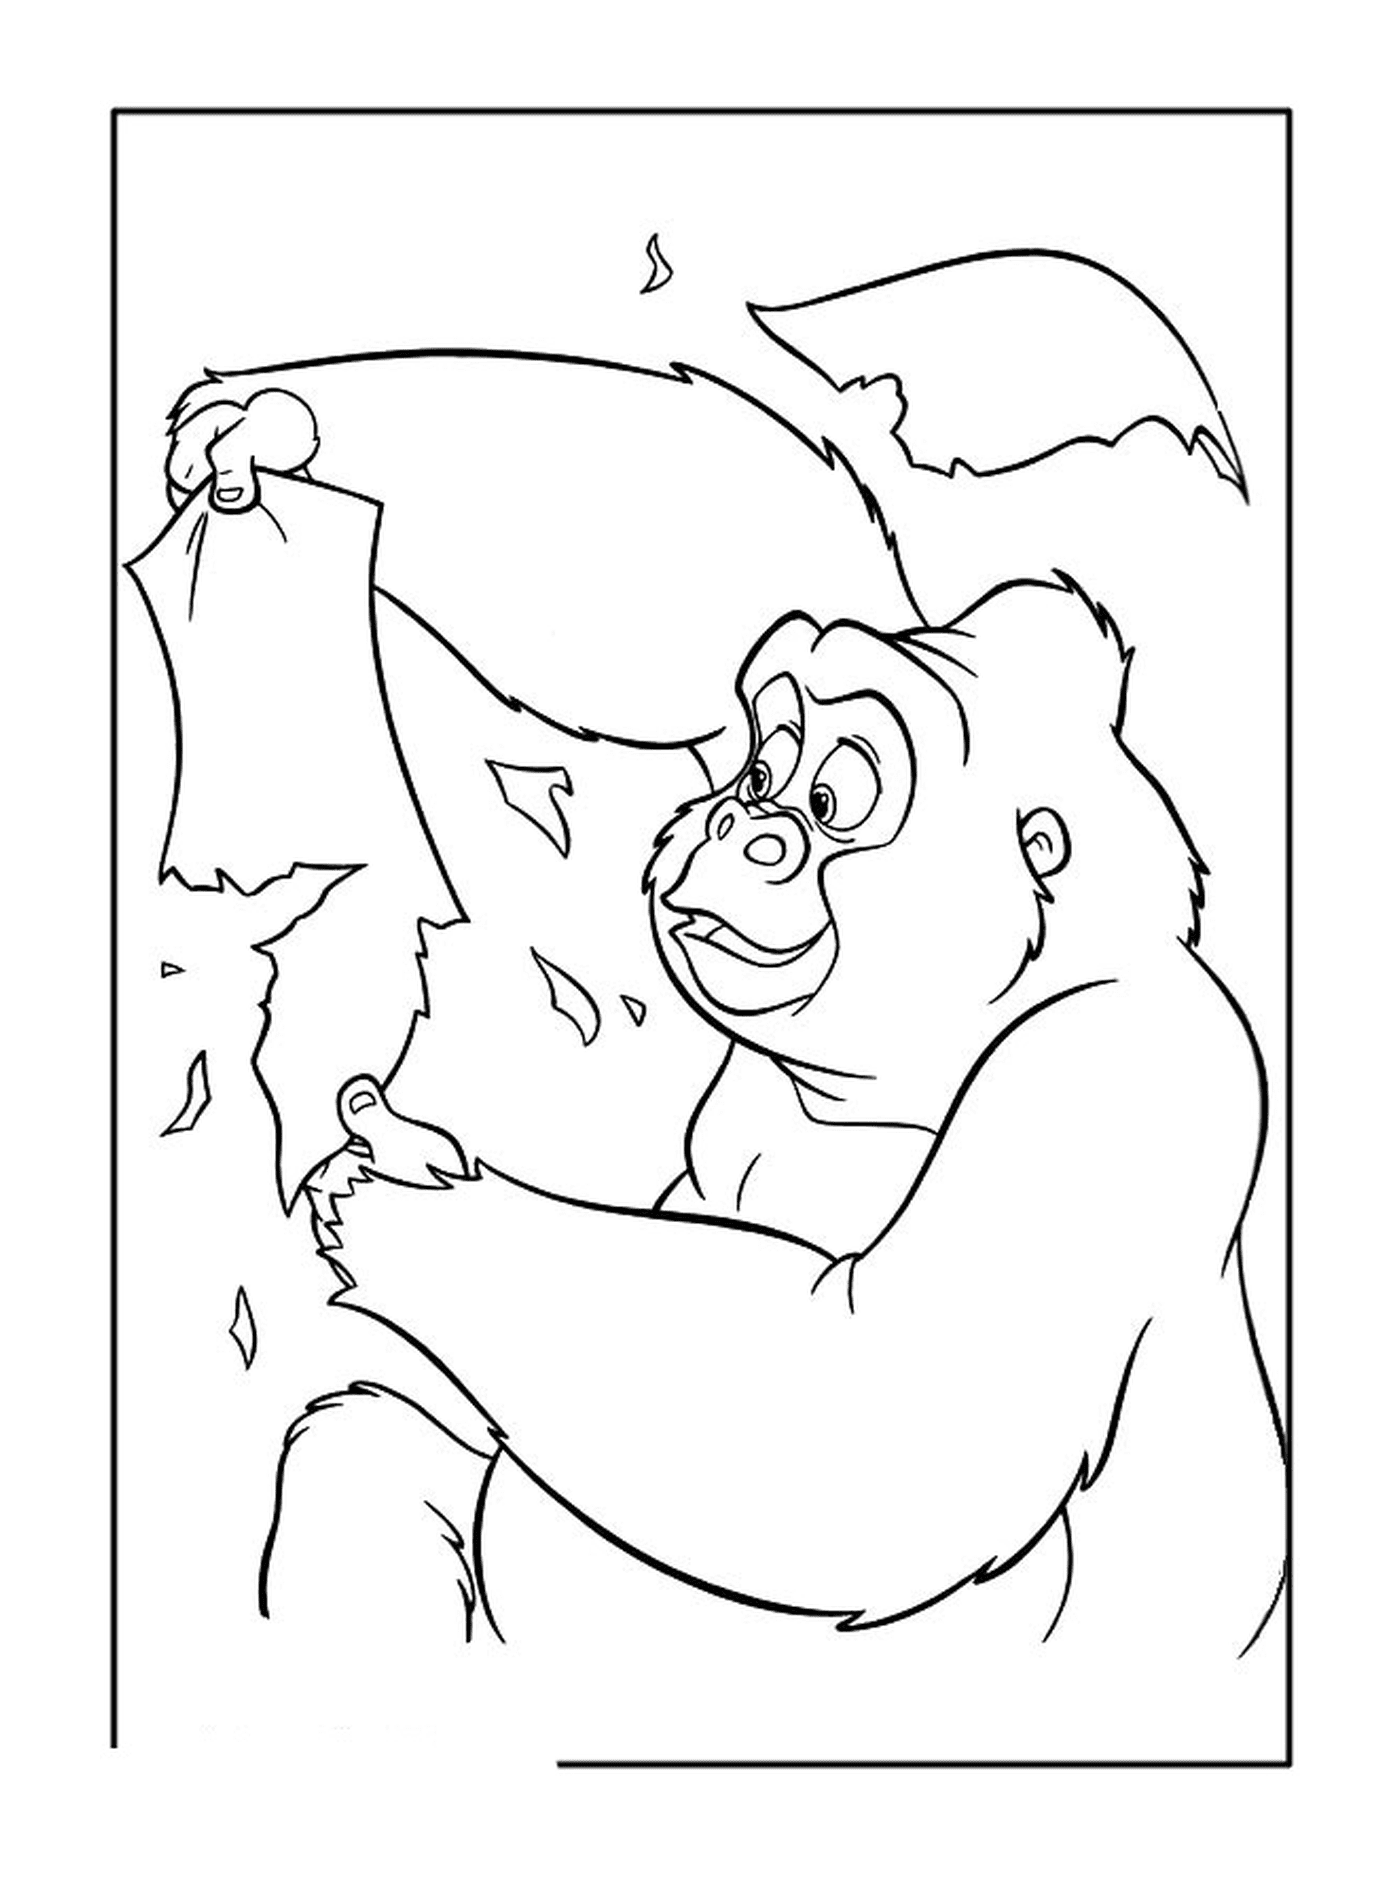  Adult gorilla holding leaves 